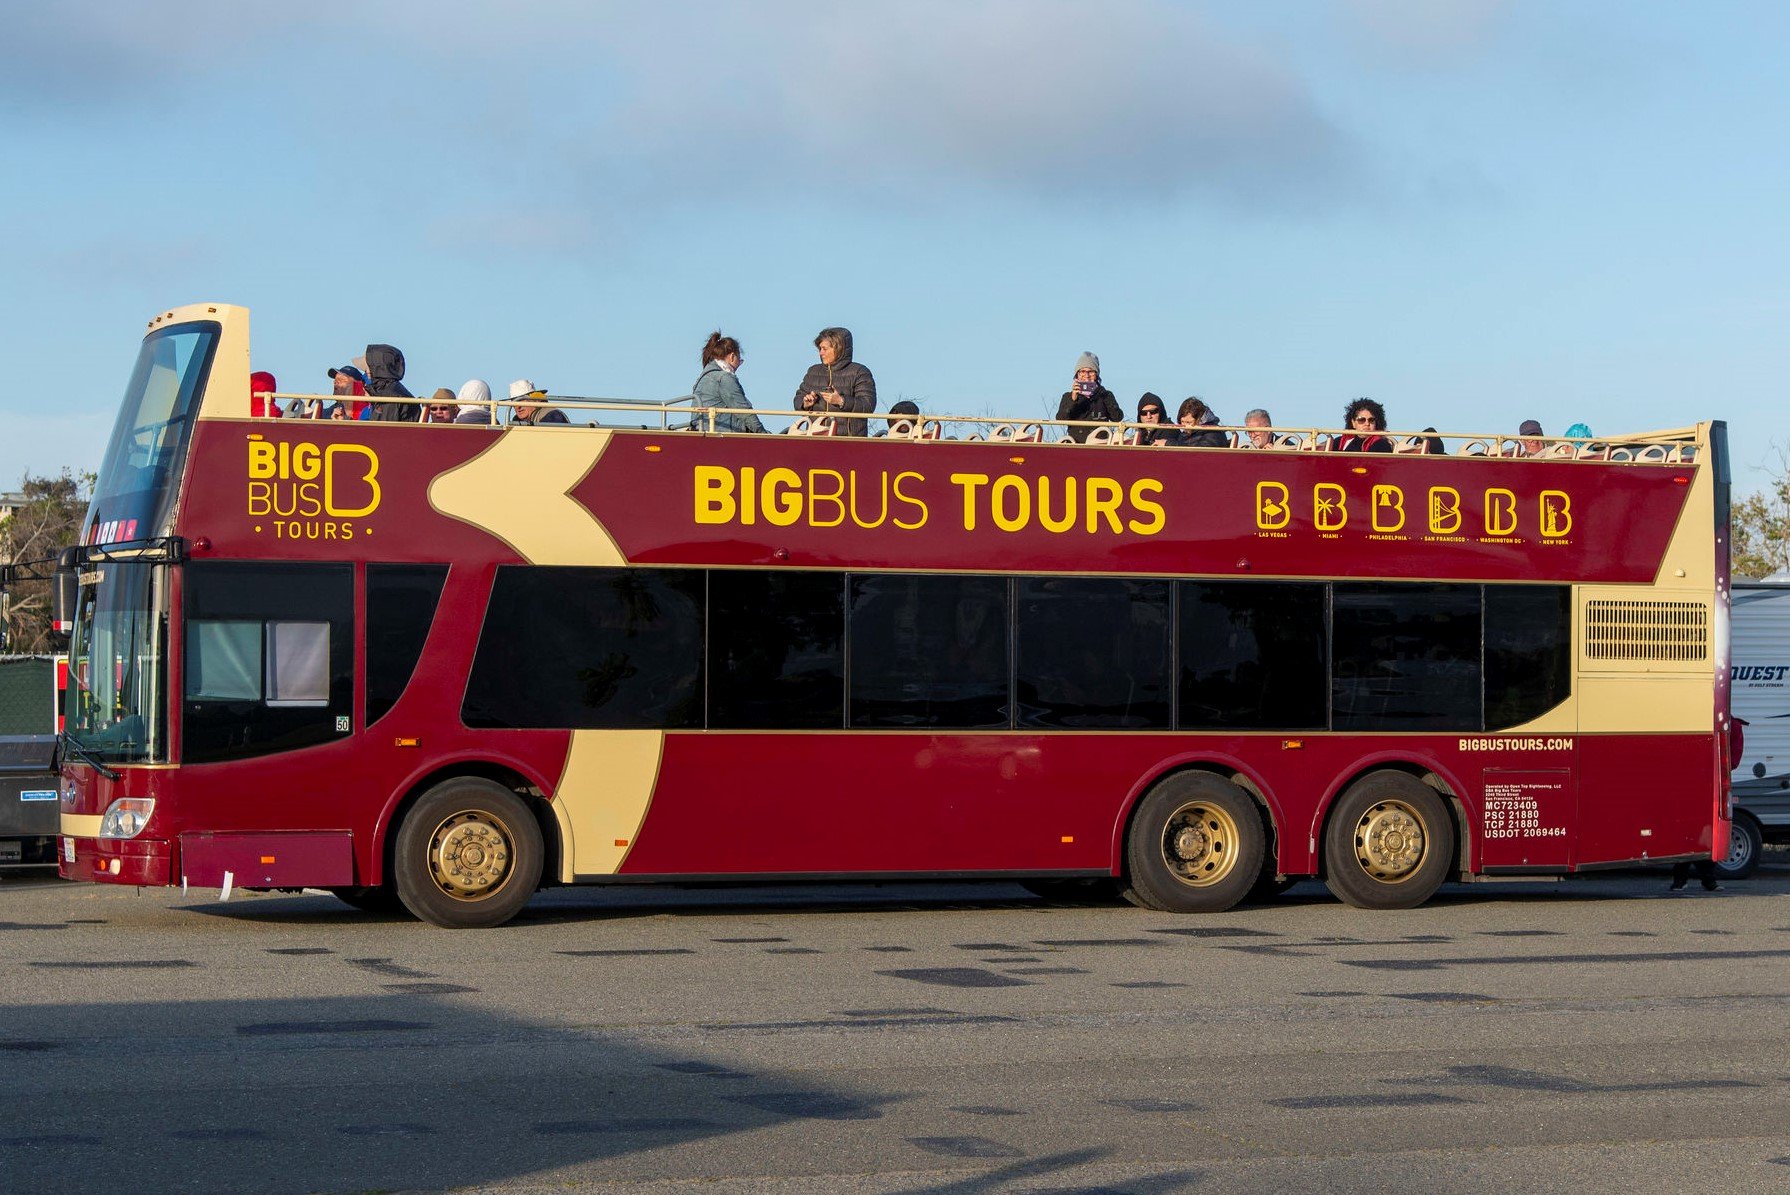 big bus tours stop near me